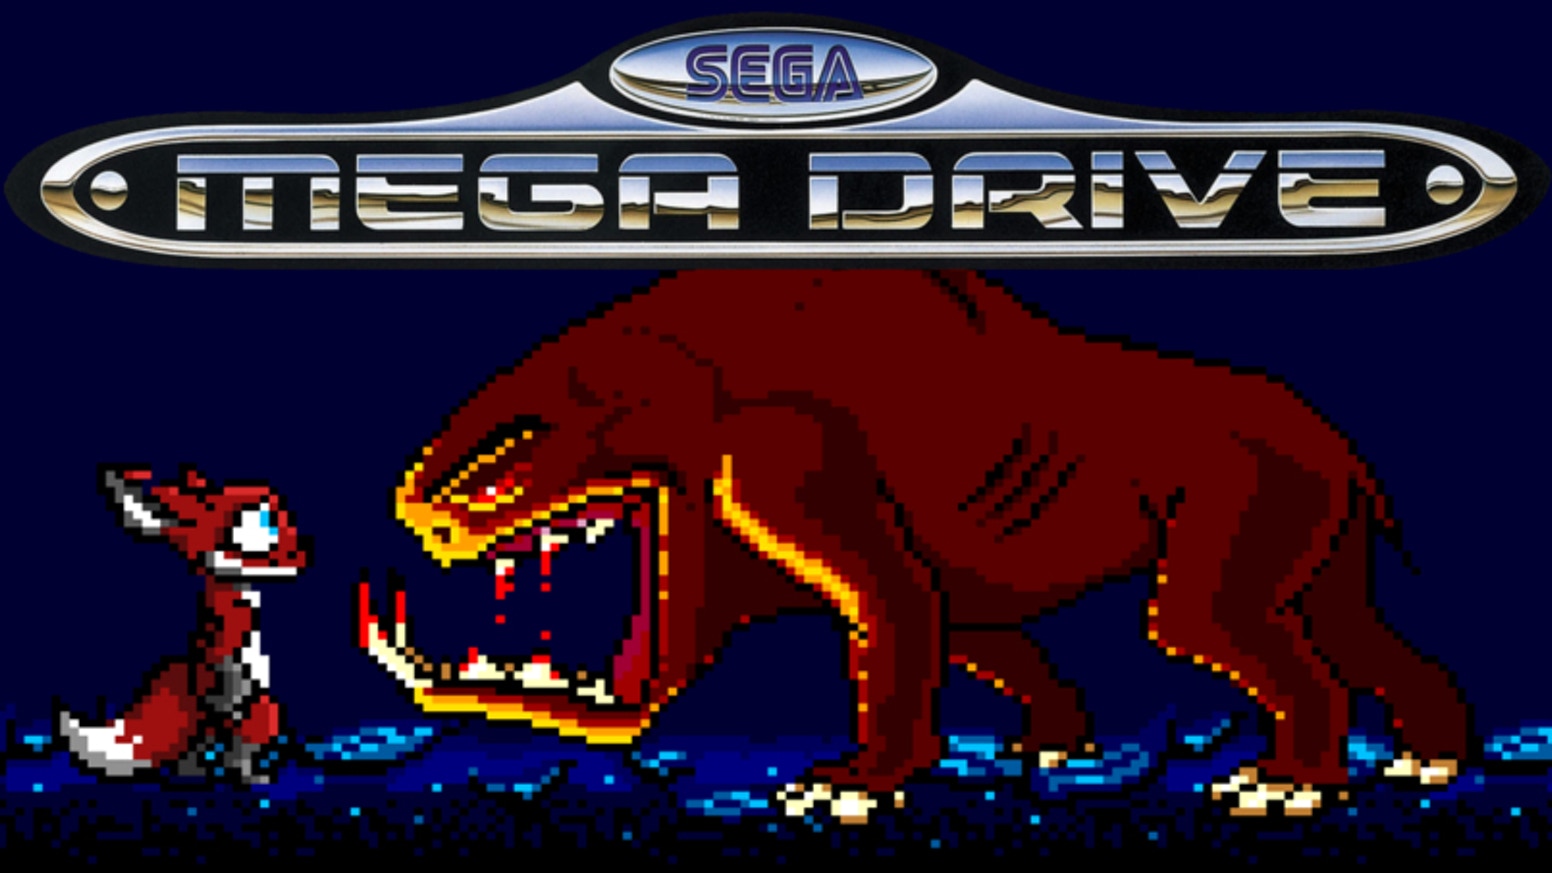 Sega Genesis Emulator Free Download Pc